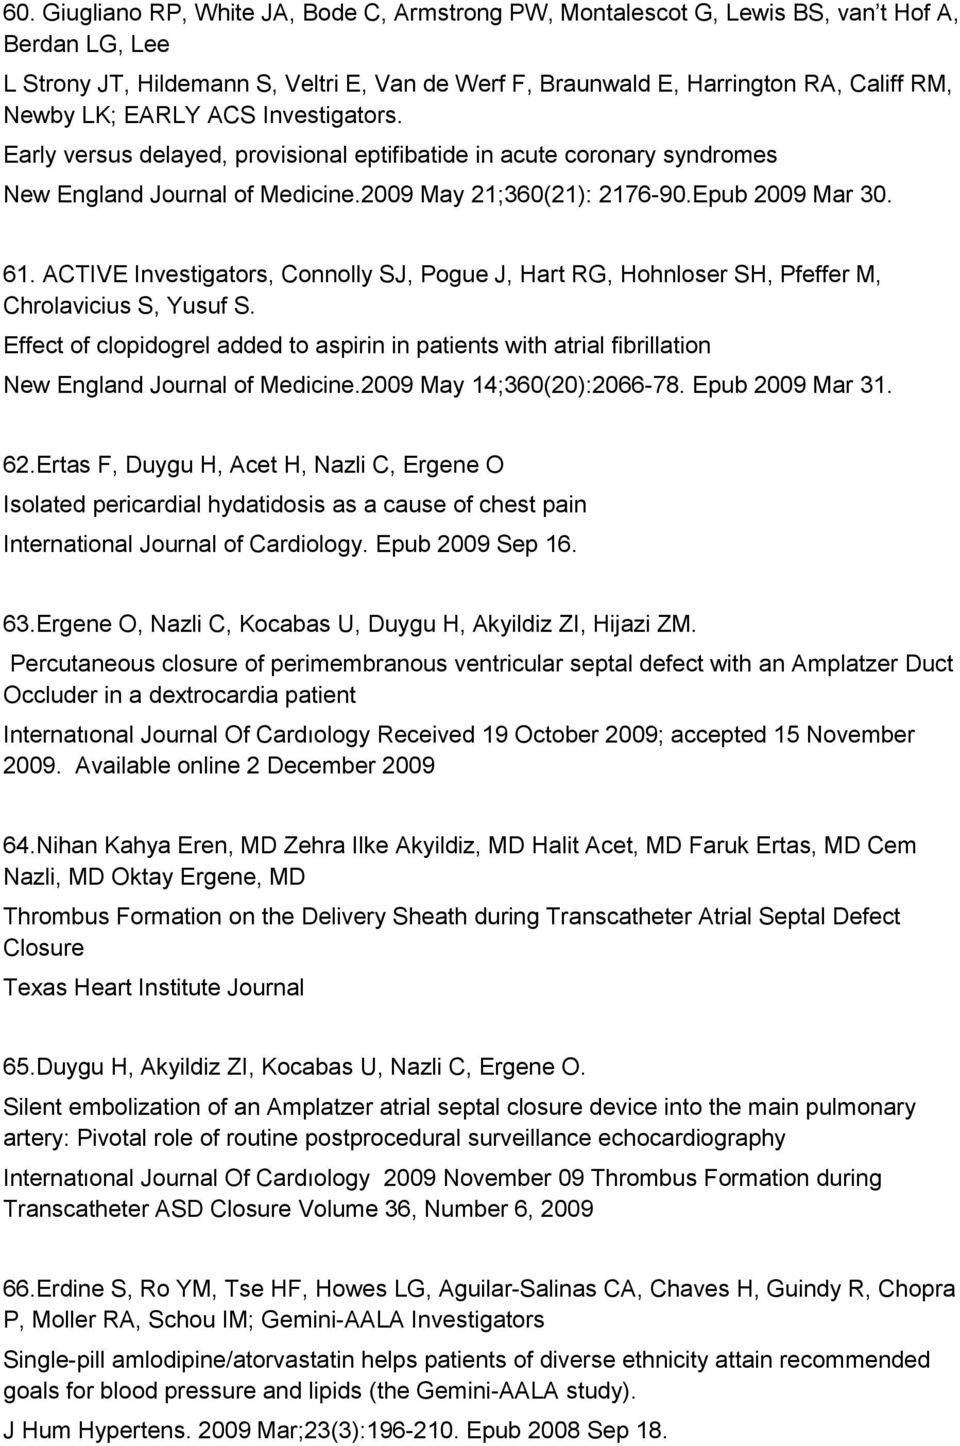 ACTIVE Investigators, Connolly SJ, Pogue J, Hart RG, Hohnloser SH, Pfeffer M, Chrolavicius S, Yusuf S.